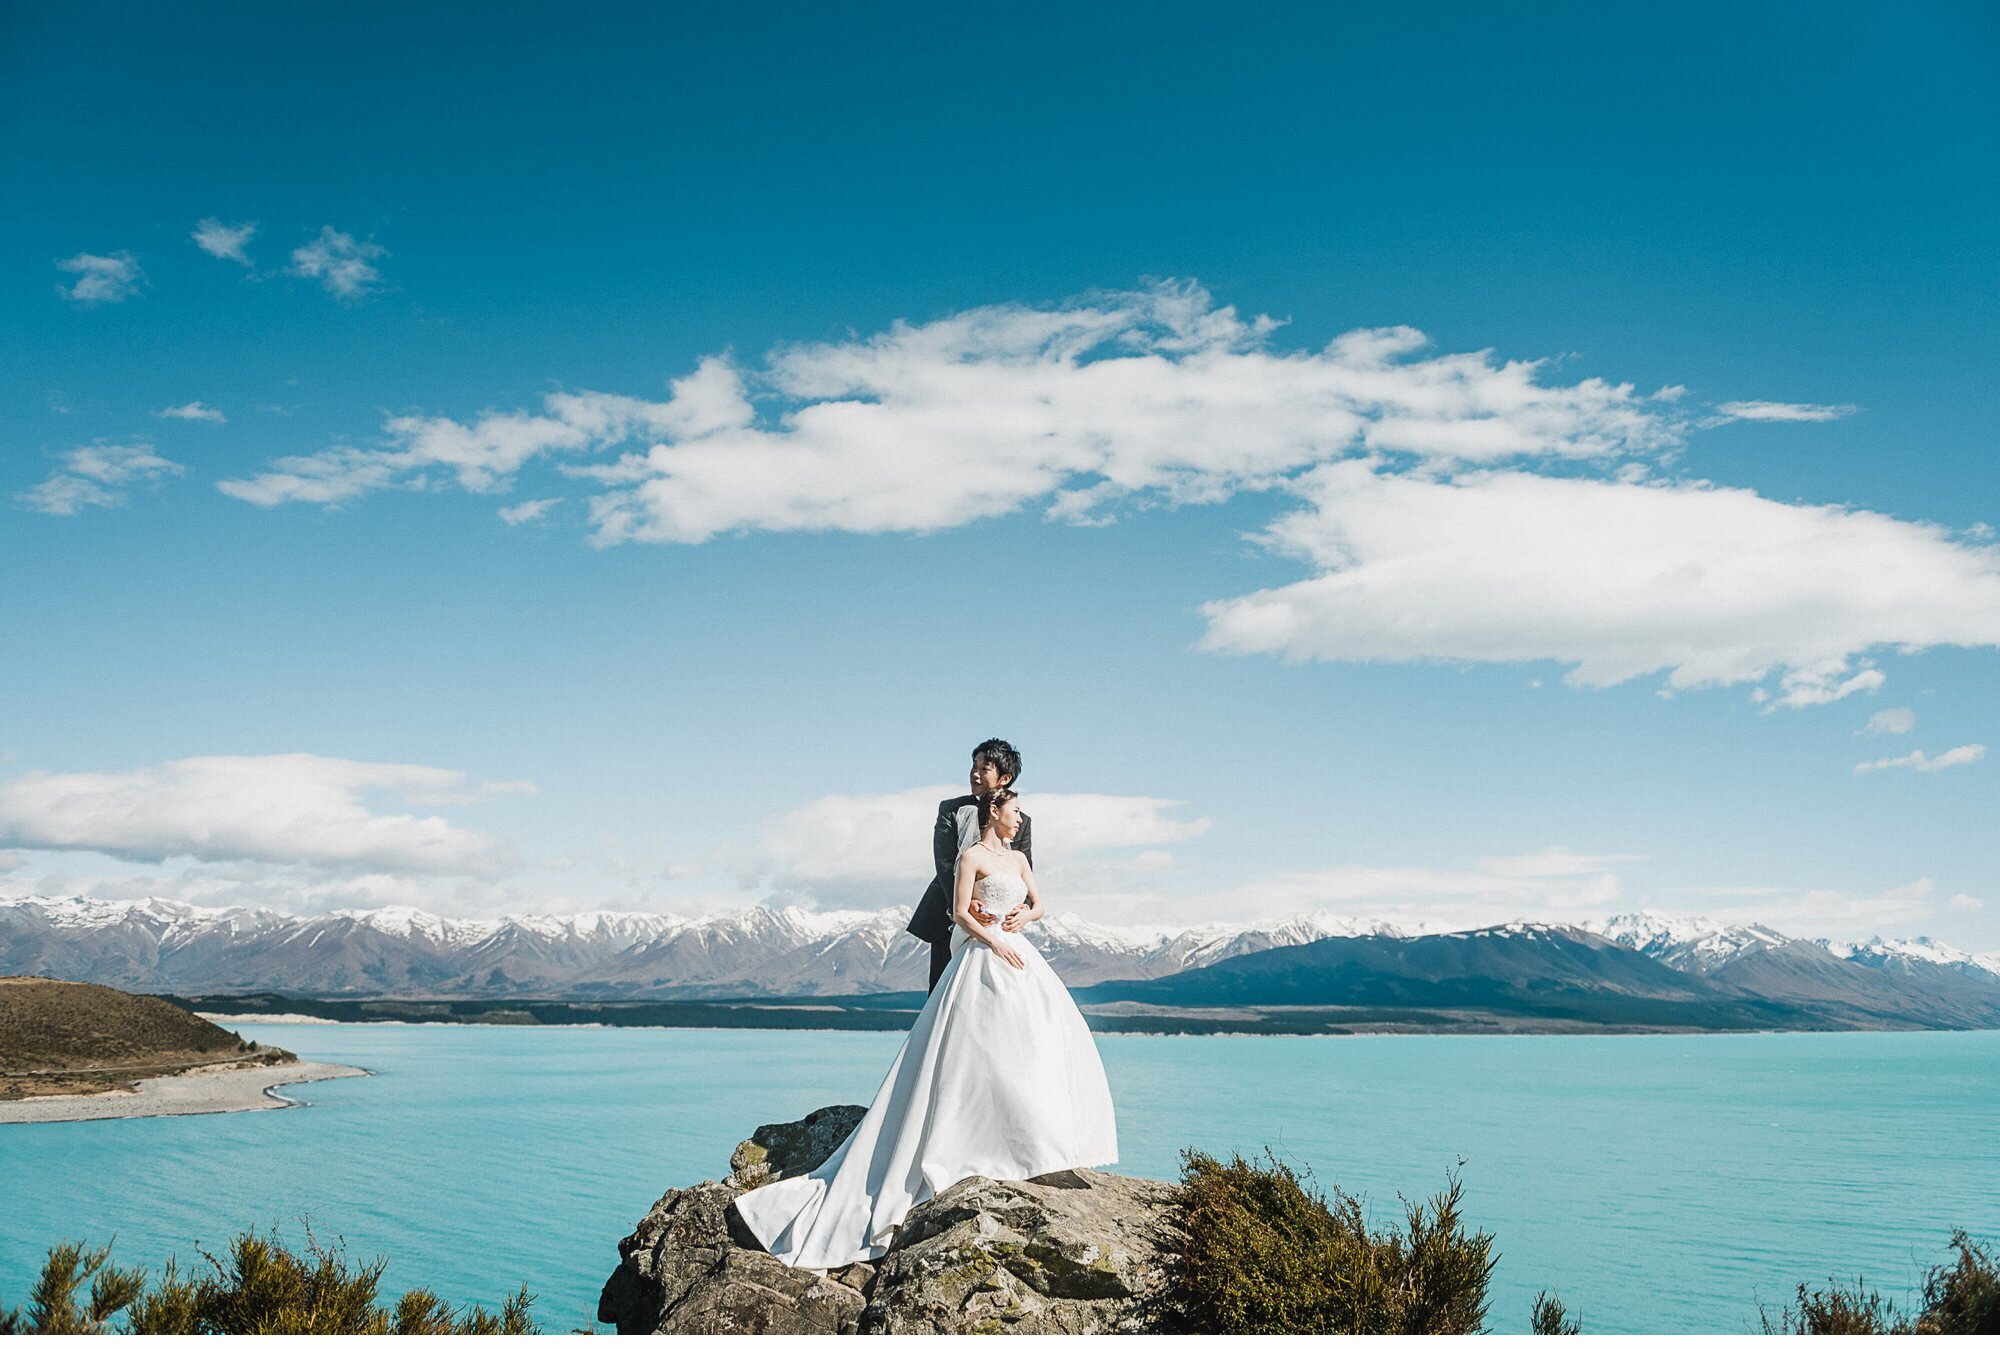 043 - New Zealand Wedding Photography Highlights.jpg